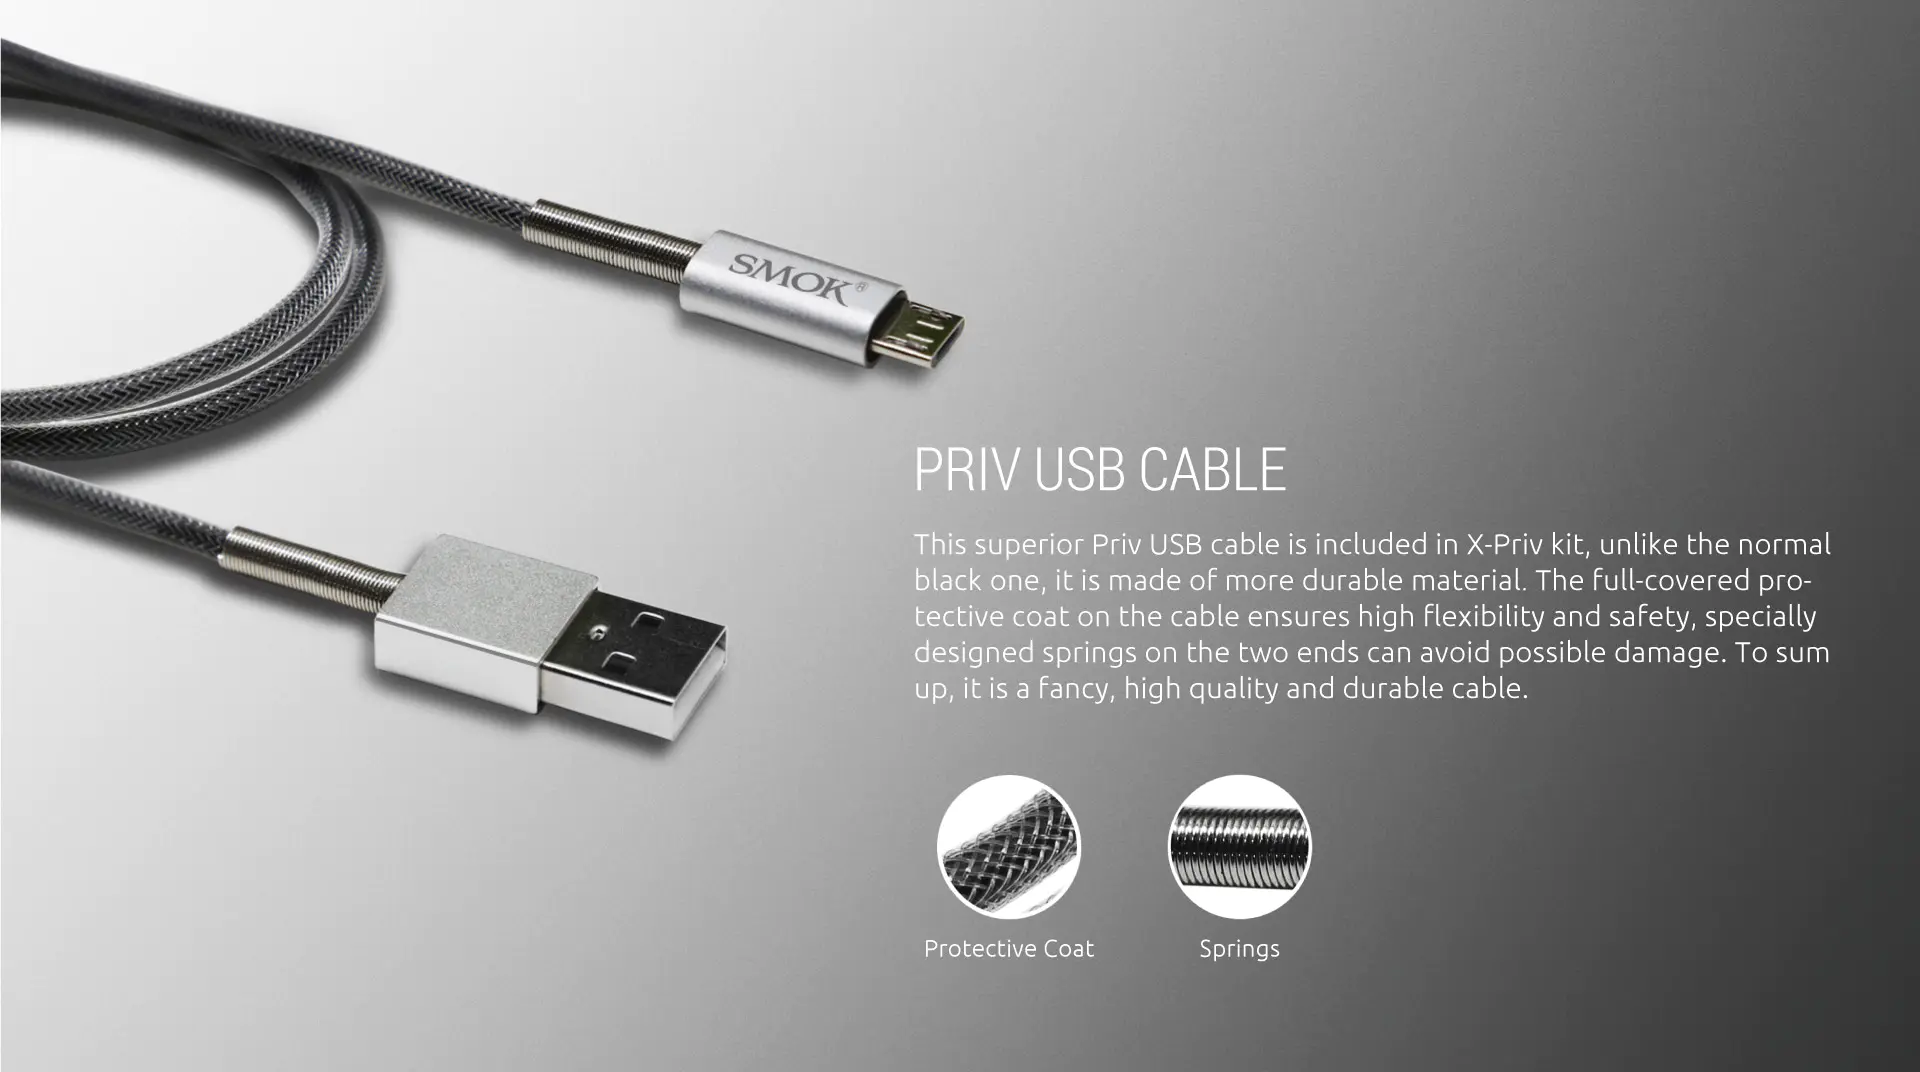 Priv USB Cable of SMOK X-Priv Kit